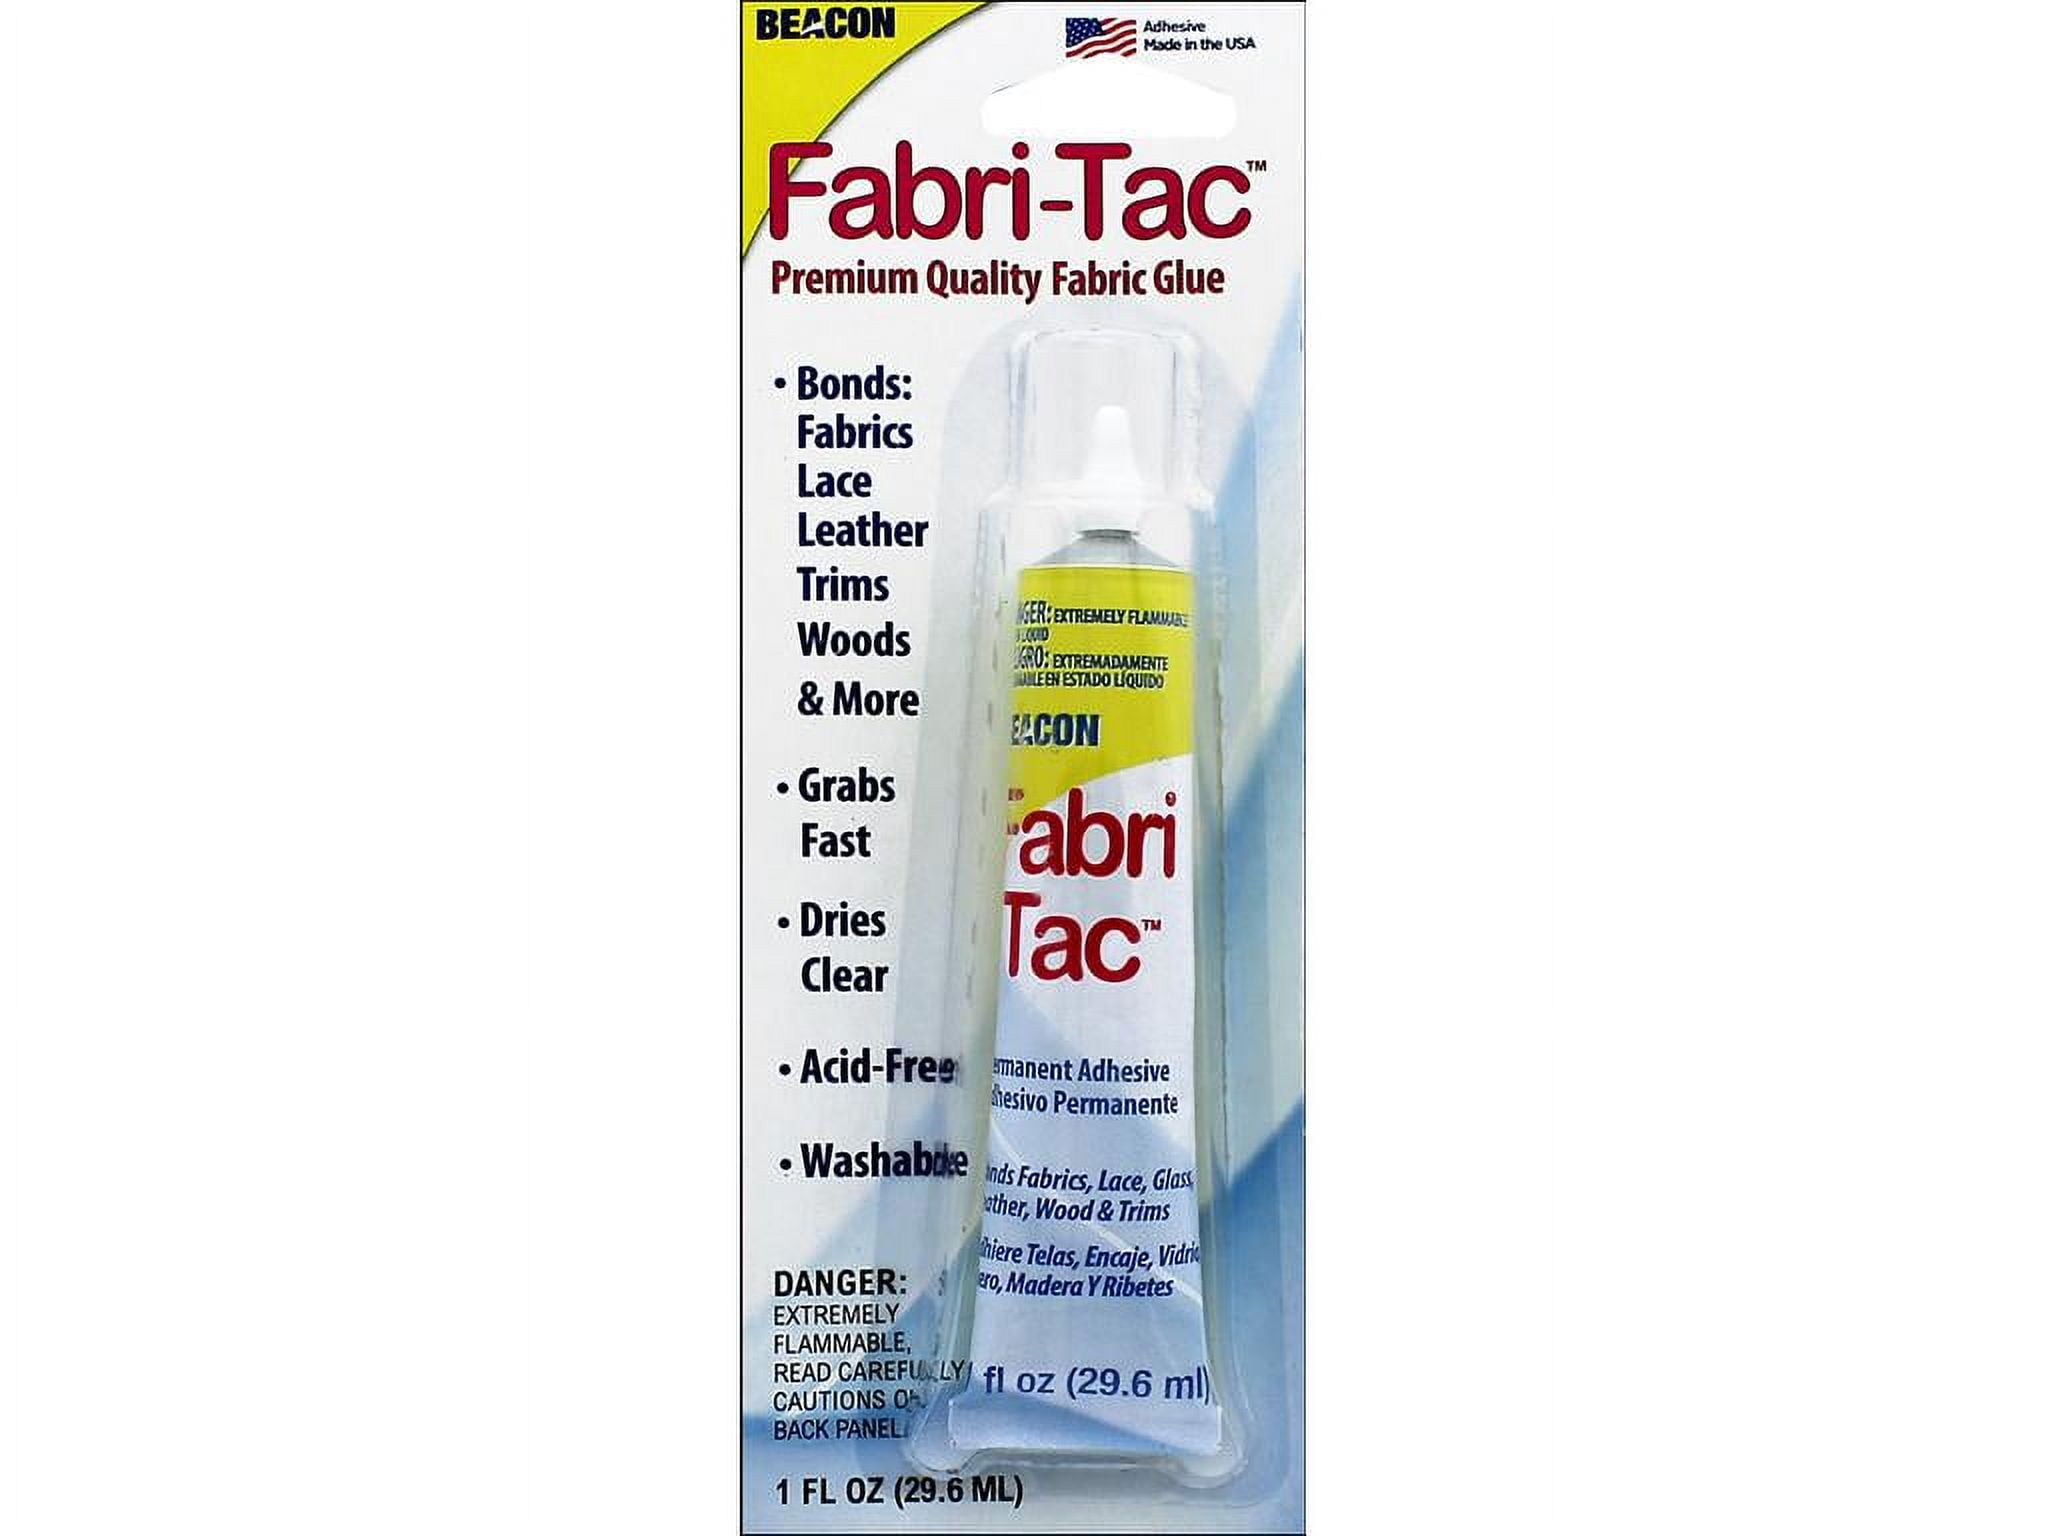 Beacon Gem-Tac™ Glue in Original Precision Tip Bottles